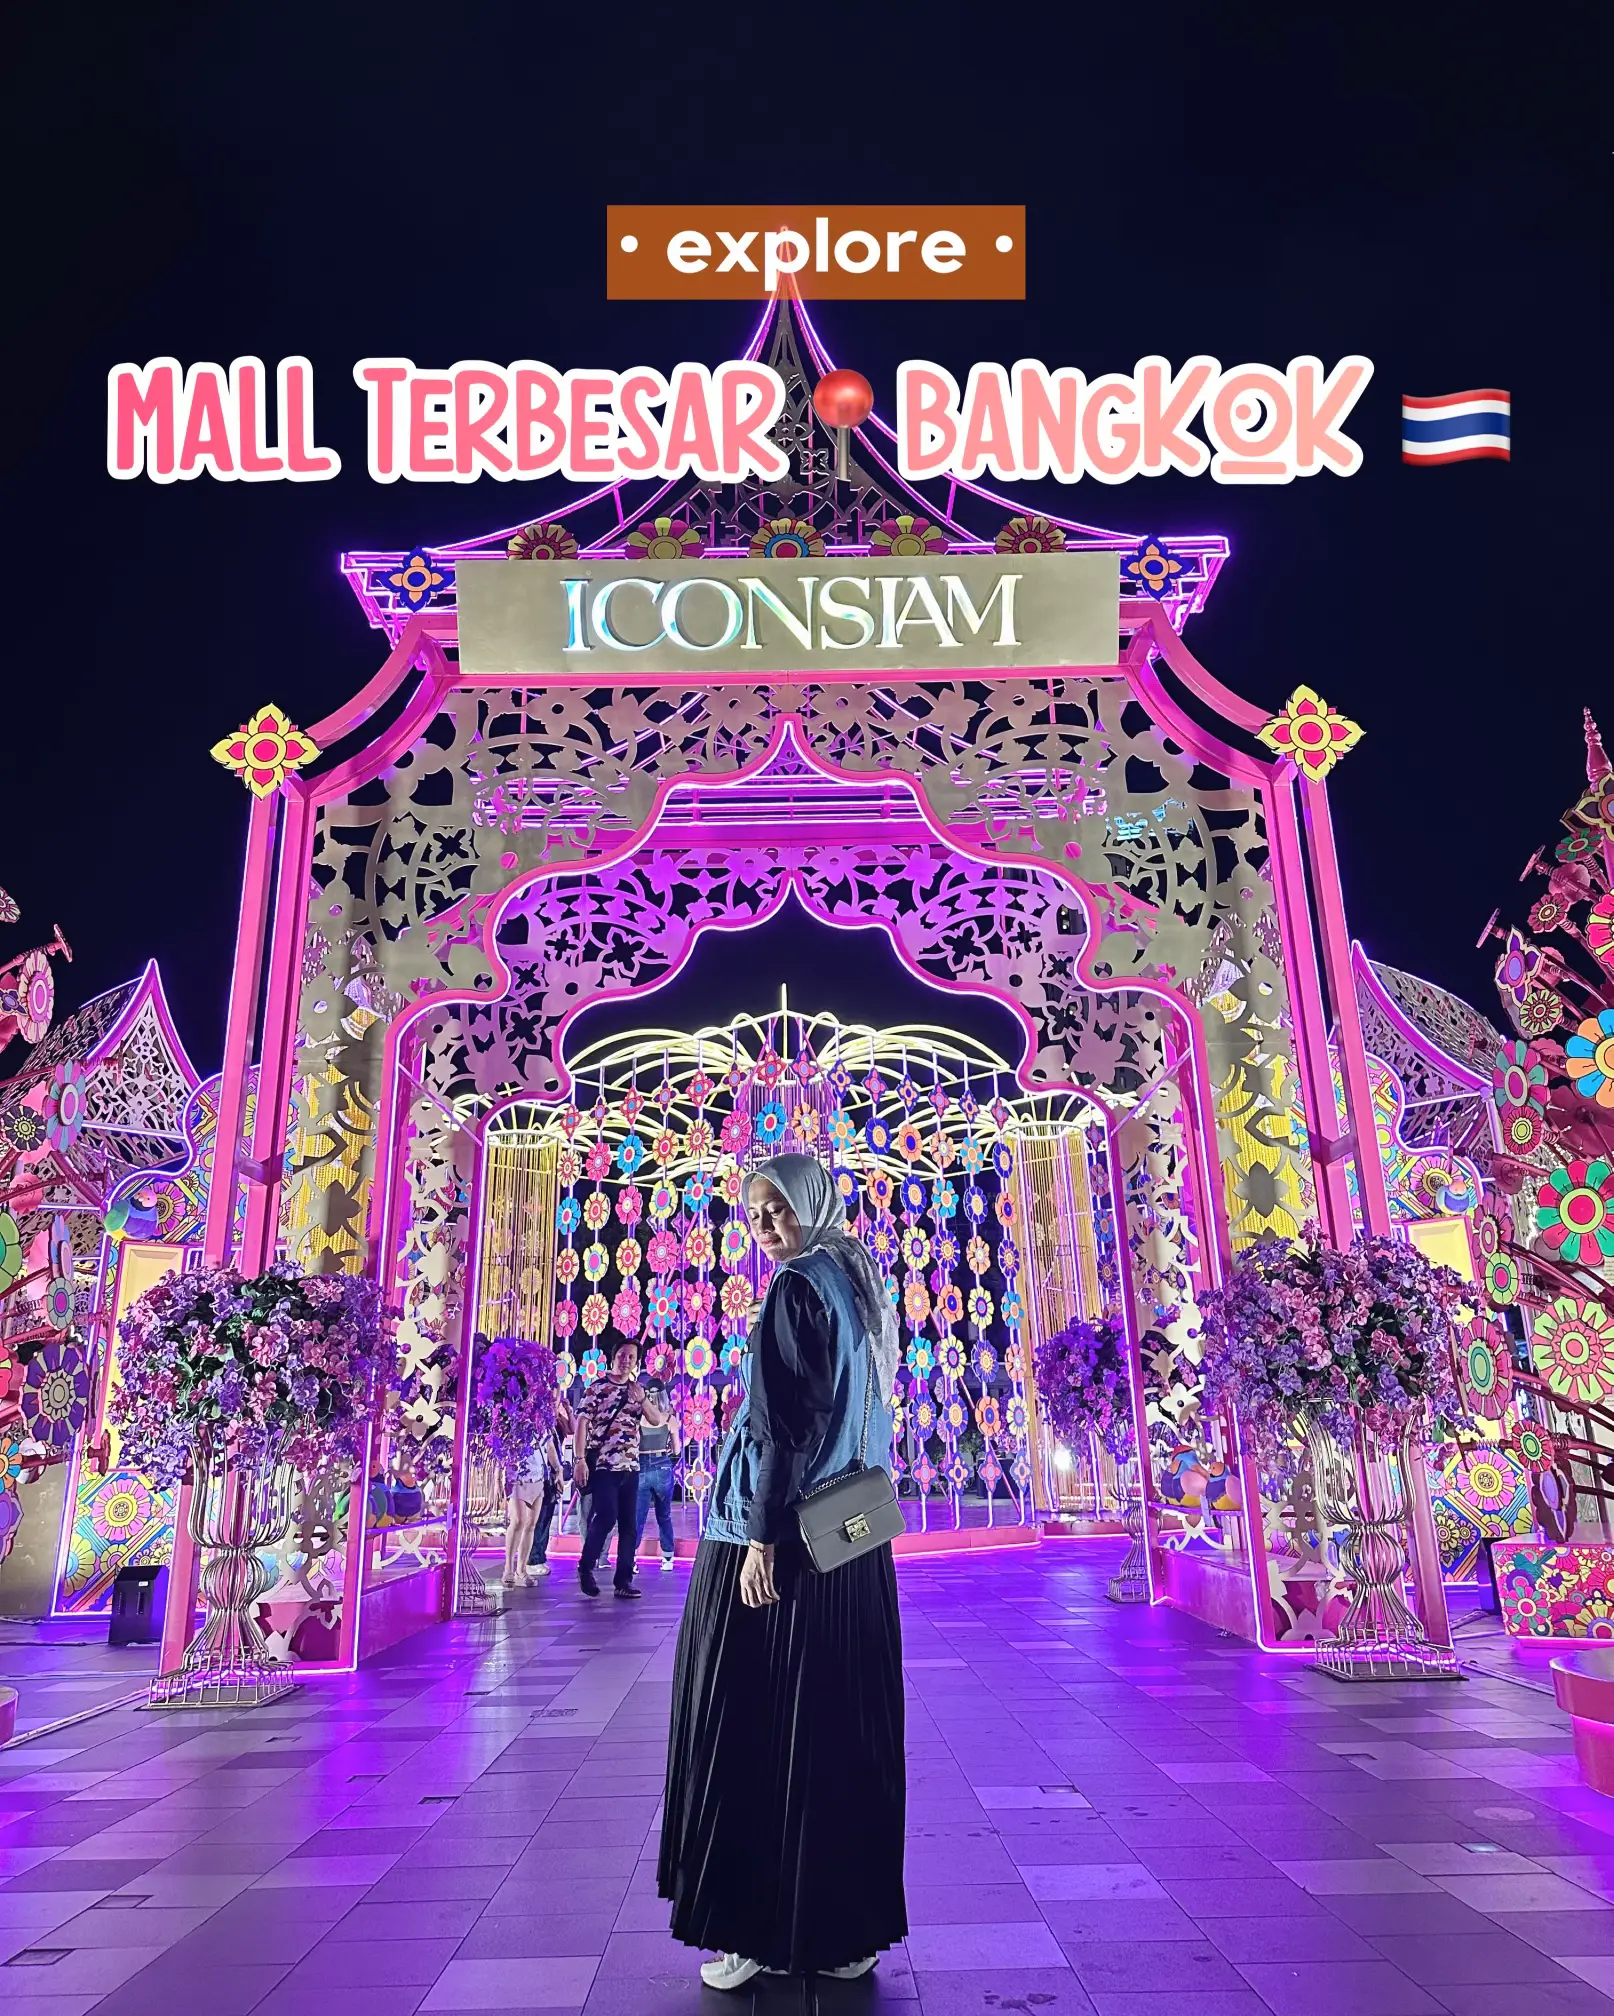 Explore Mall Terbesar di Bangkok - Icon Siam, Gallery posted by vien  andrea